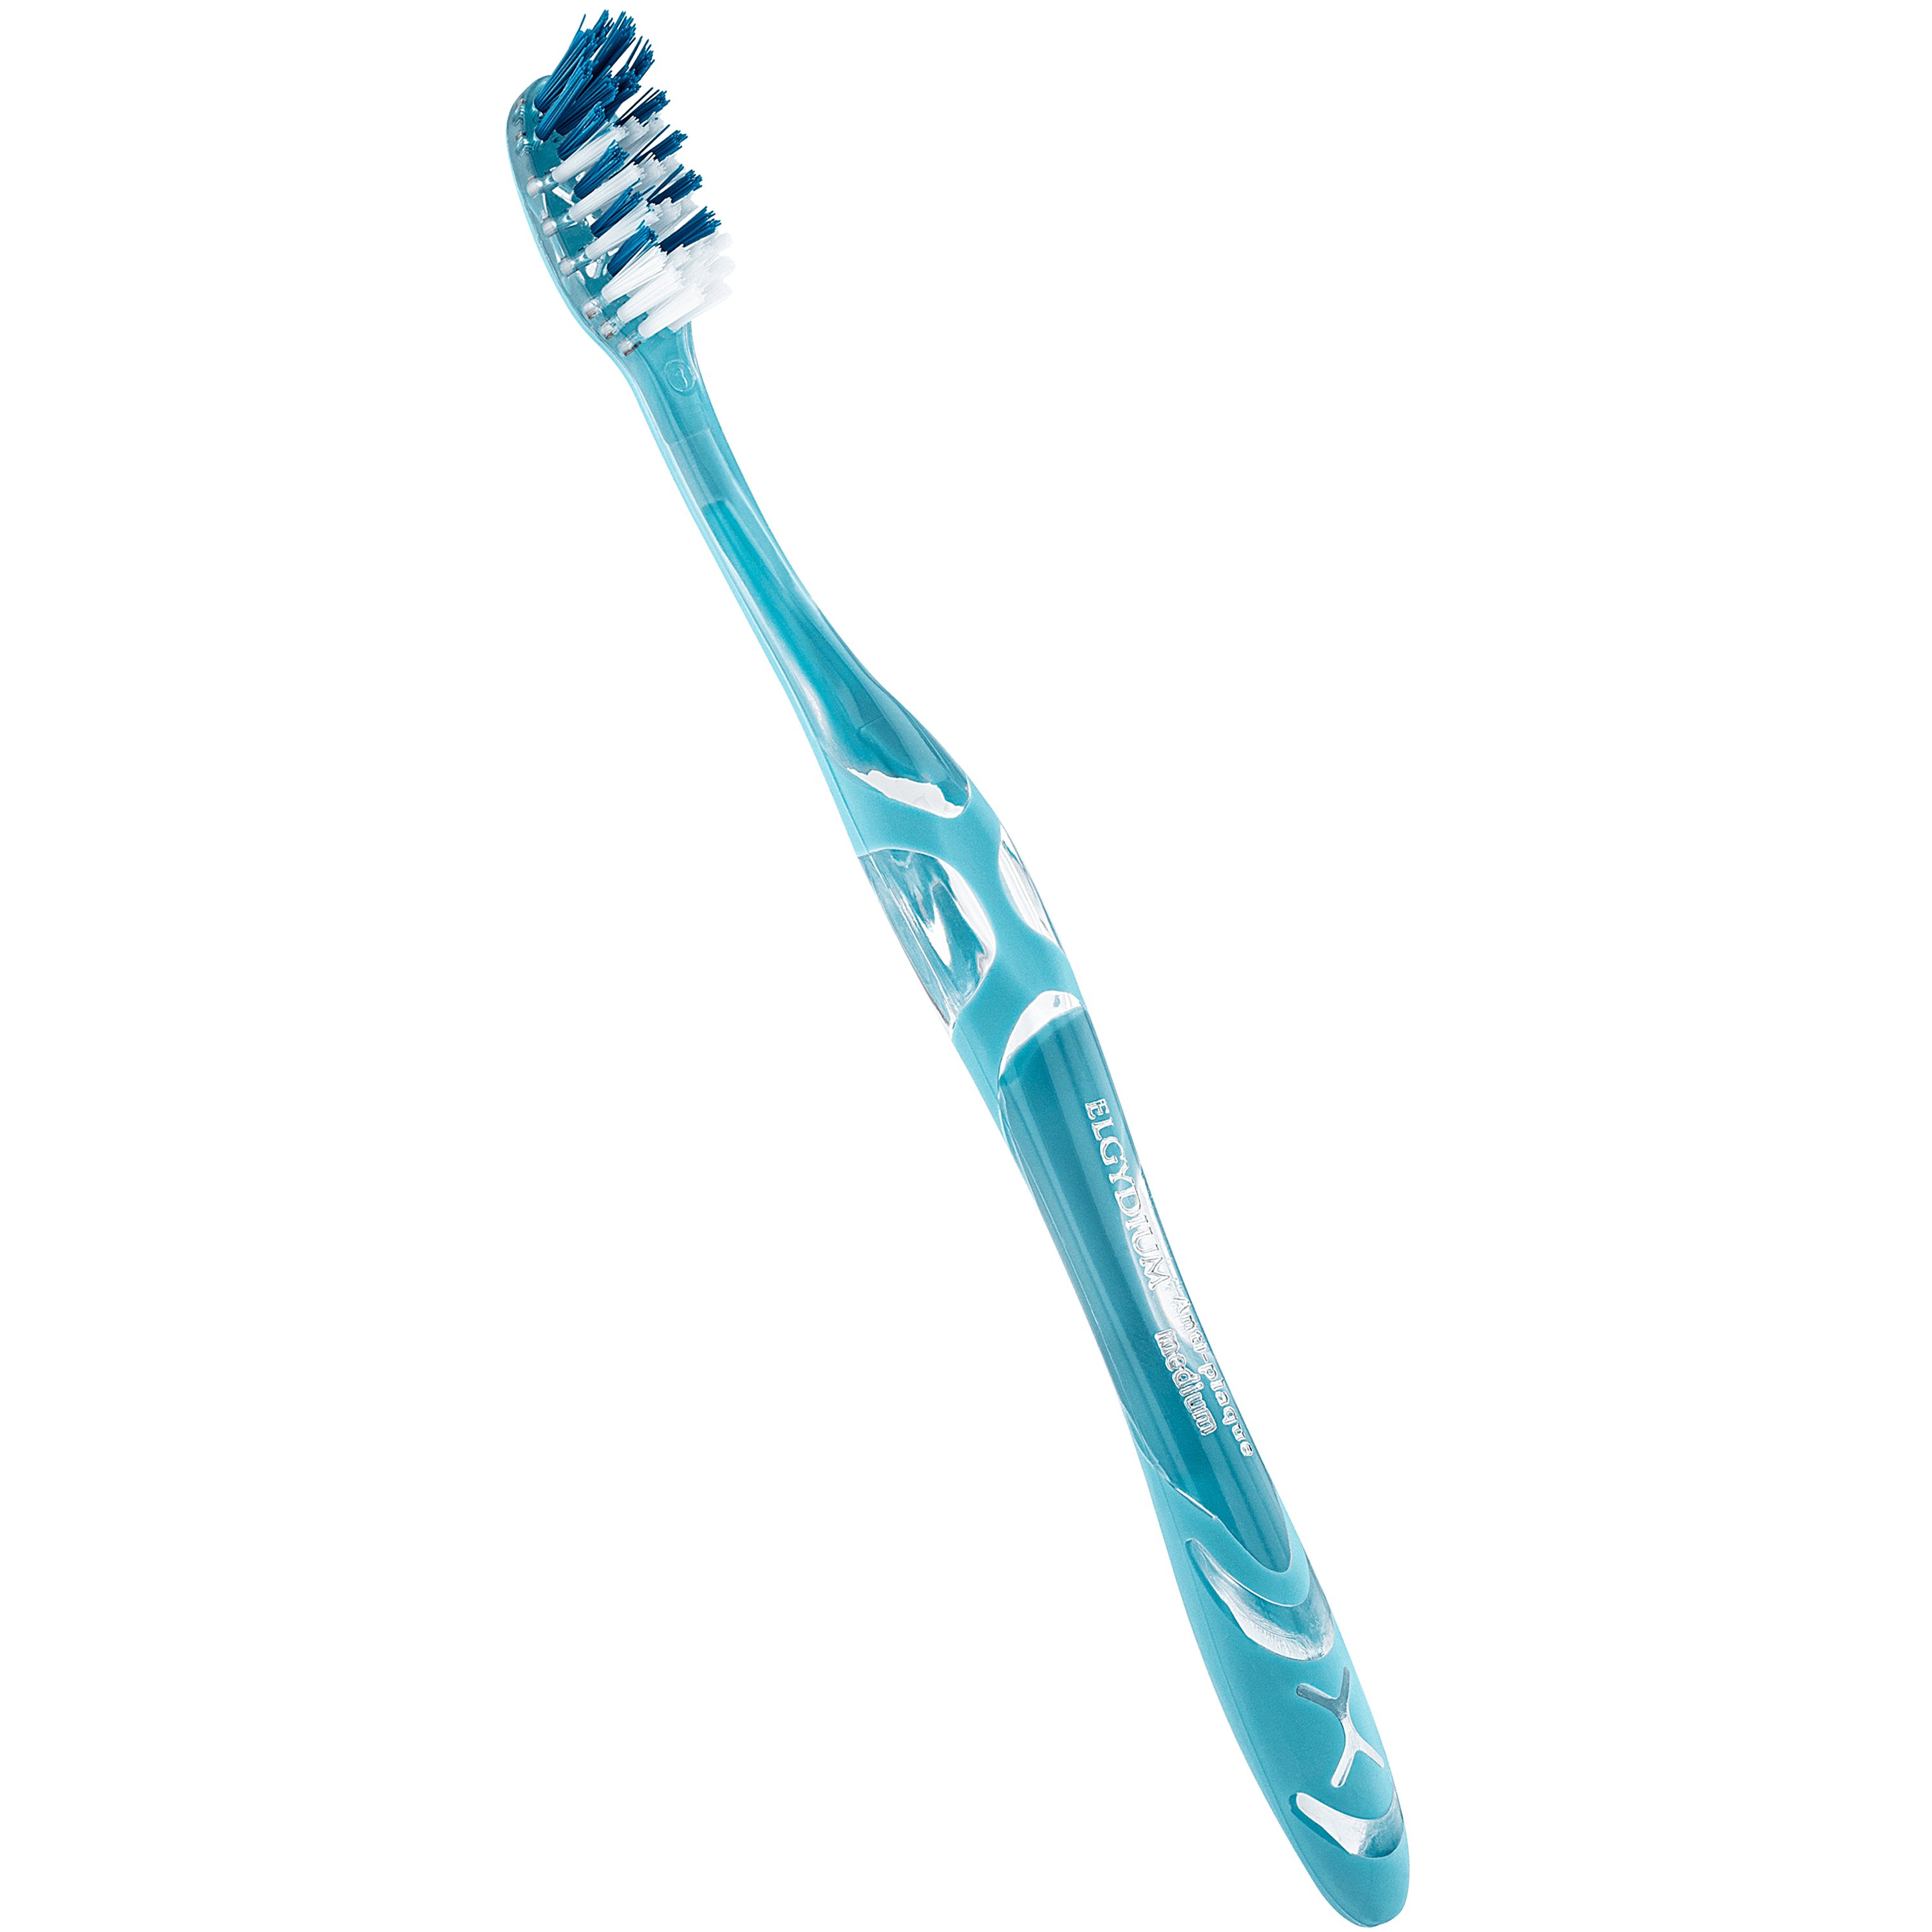 Elgydium Toothbrush Antiplaque Medium Μέτρια Οδοντόβουρτσα για Βαθύ Καθαρισμό & Απομάκρυνση Οδοντικής Πλάκας 1 Τεμάχιο – Μπλε